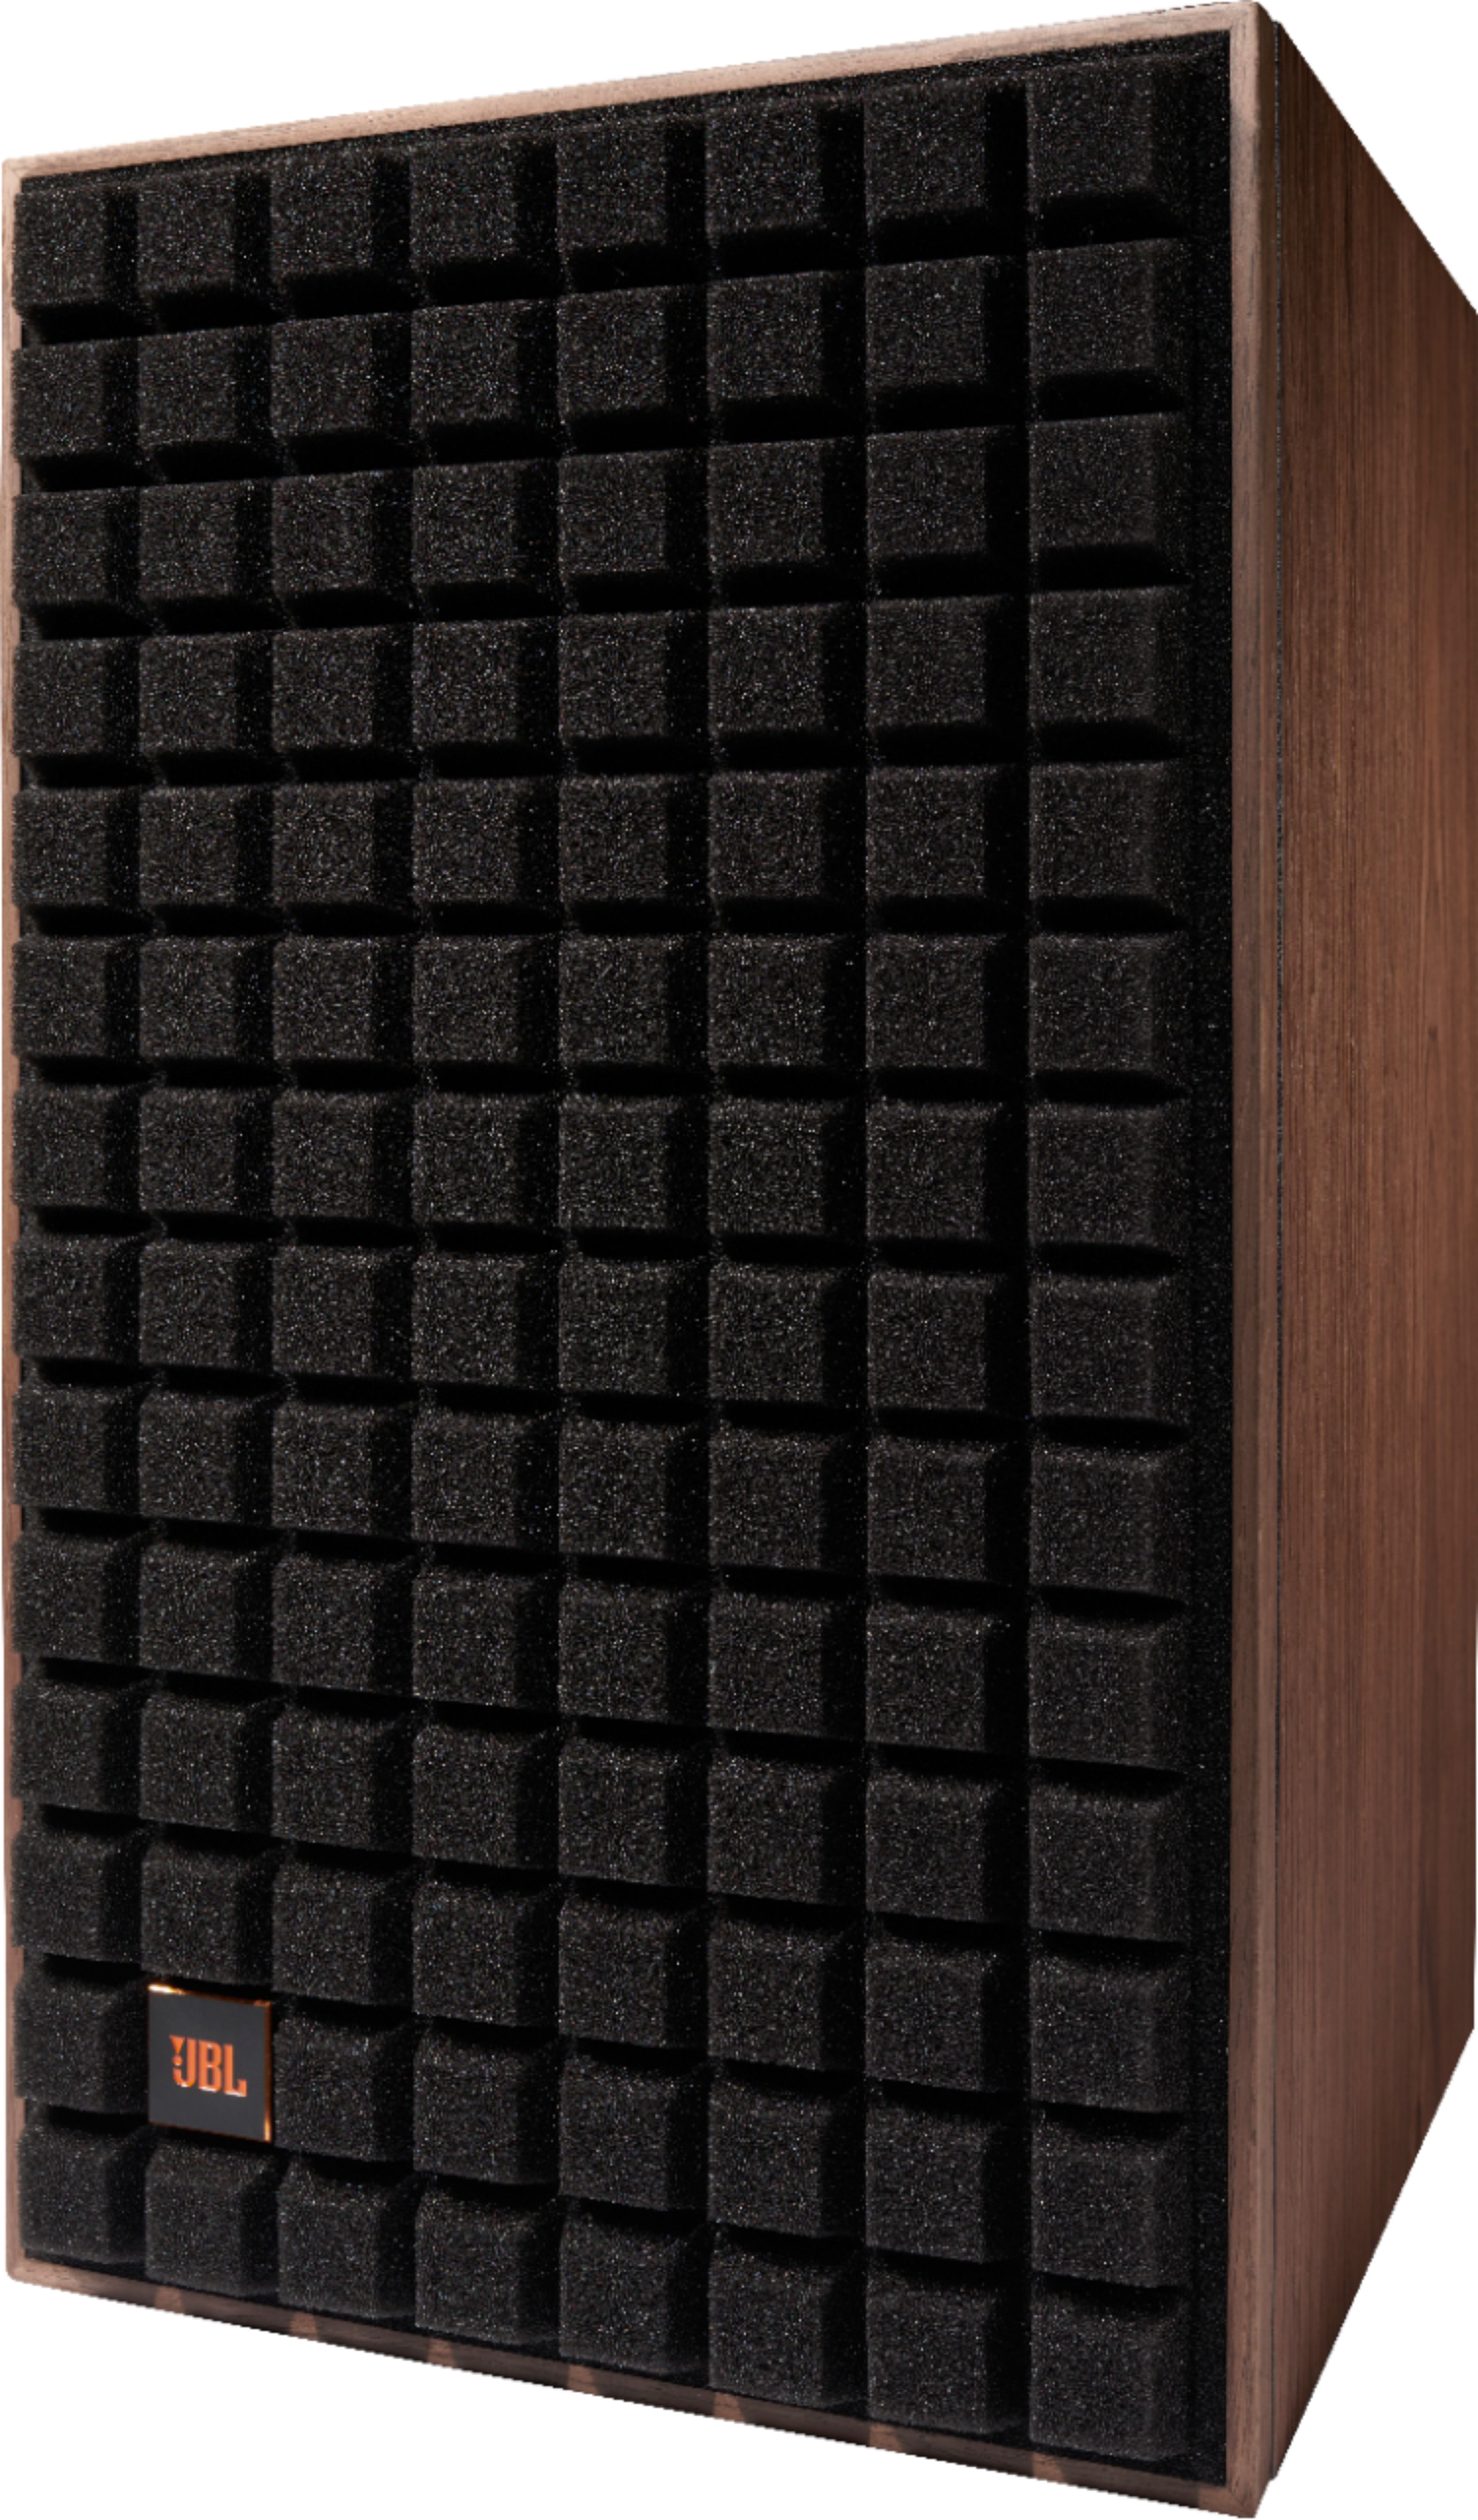 Angle View: JBL - L82Classic Bookshelf Speakers, Pair - Black Grille